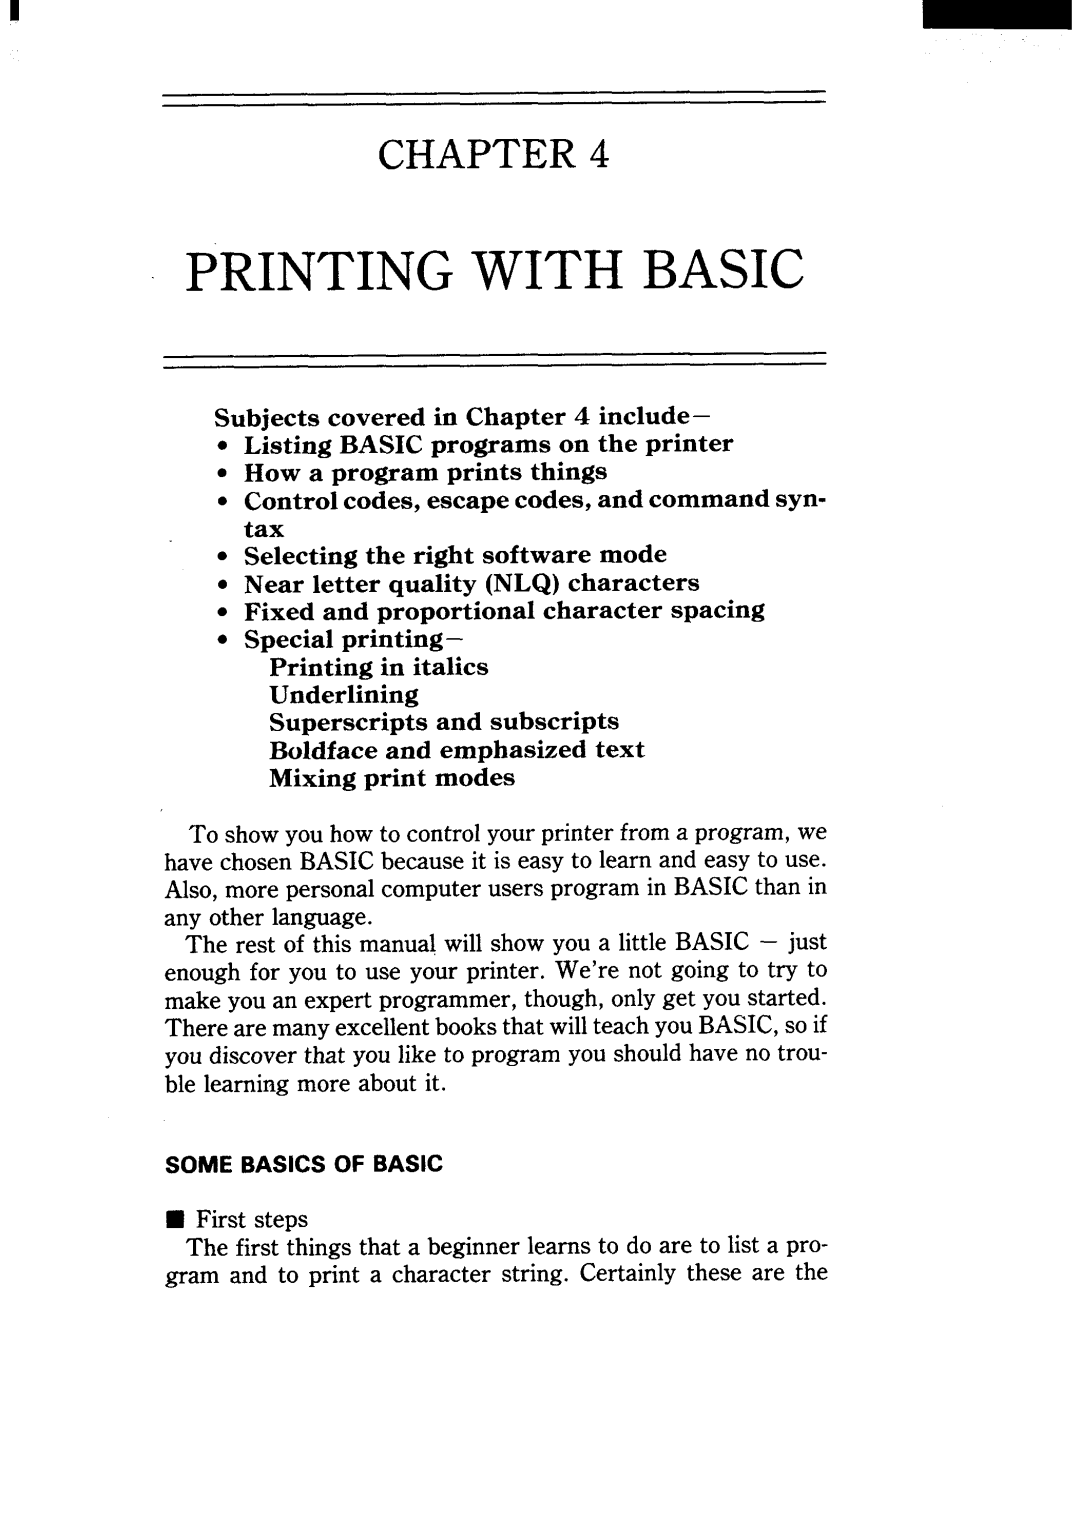 Star Micronics NX-15 user manual Printingwith Basic, Chapter 